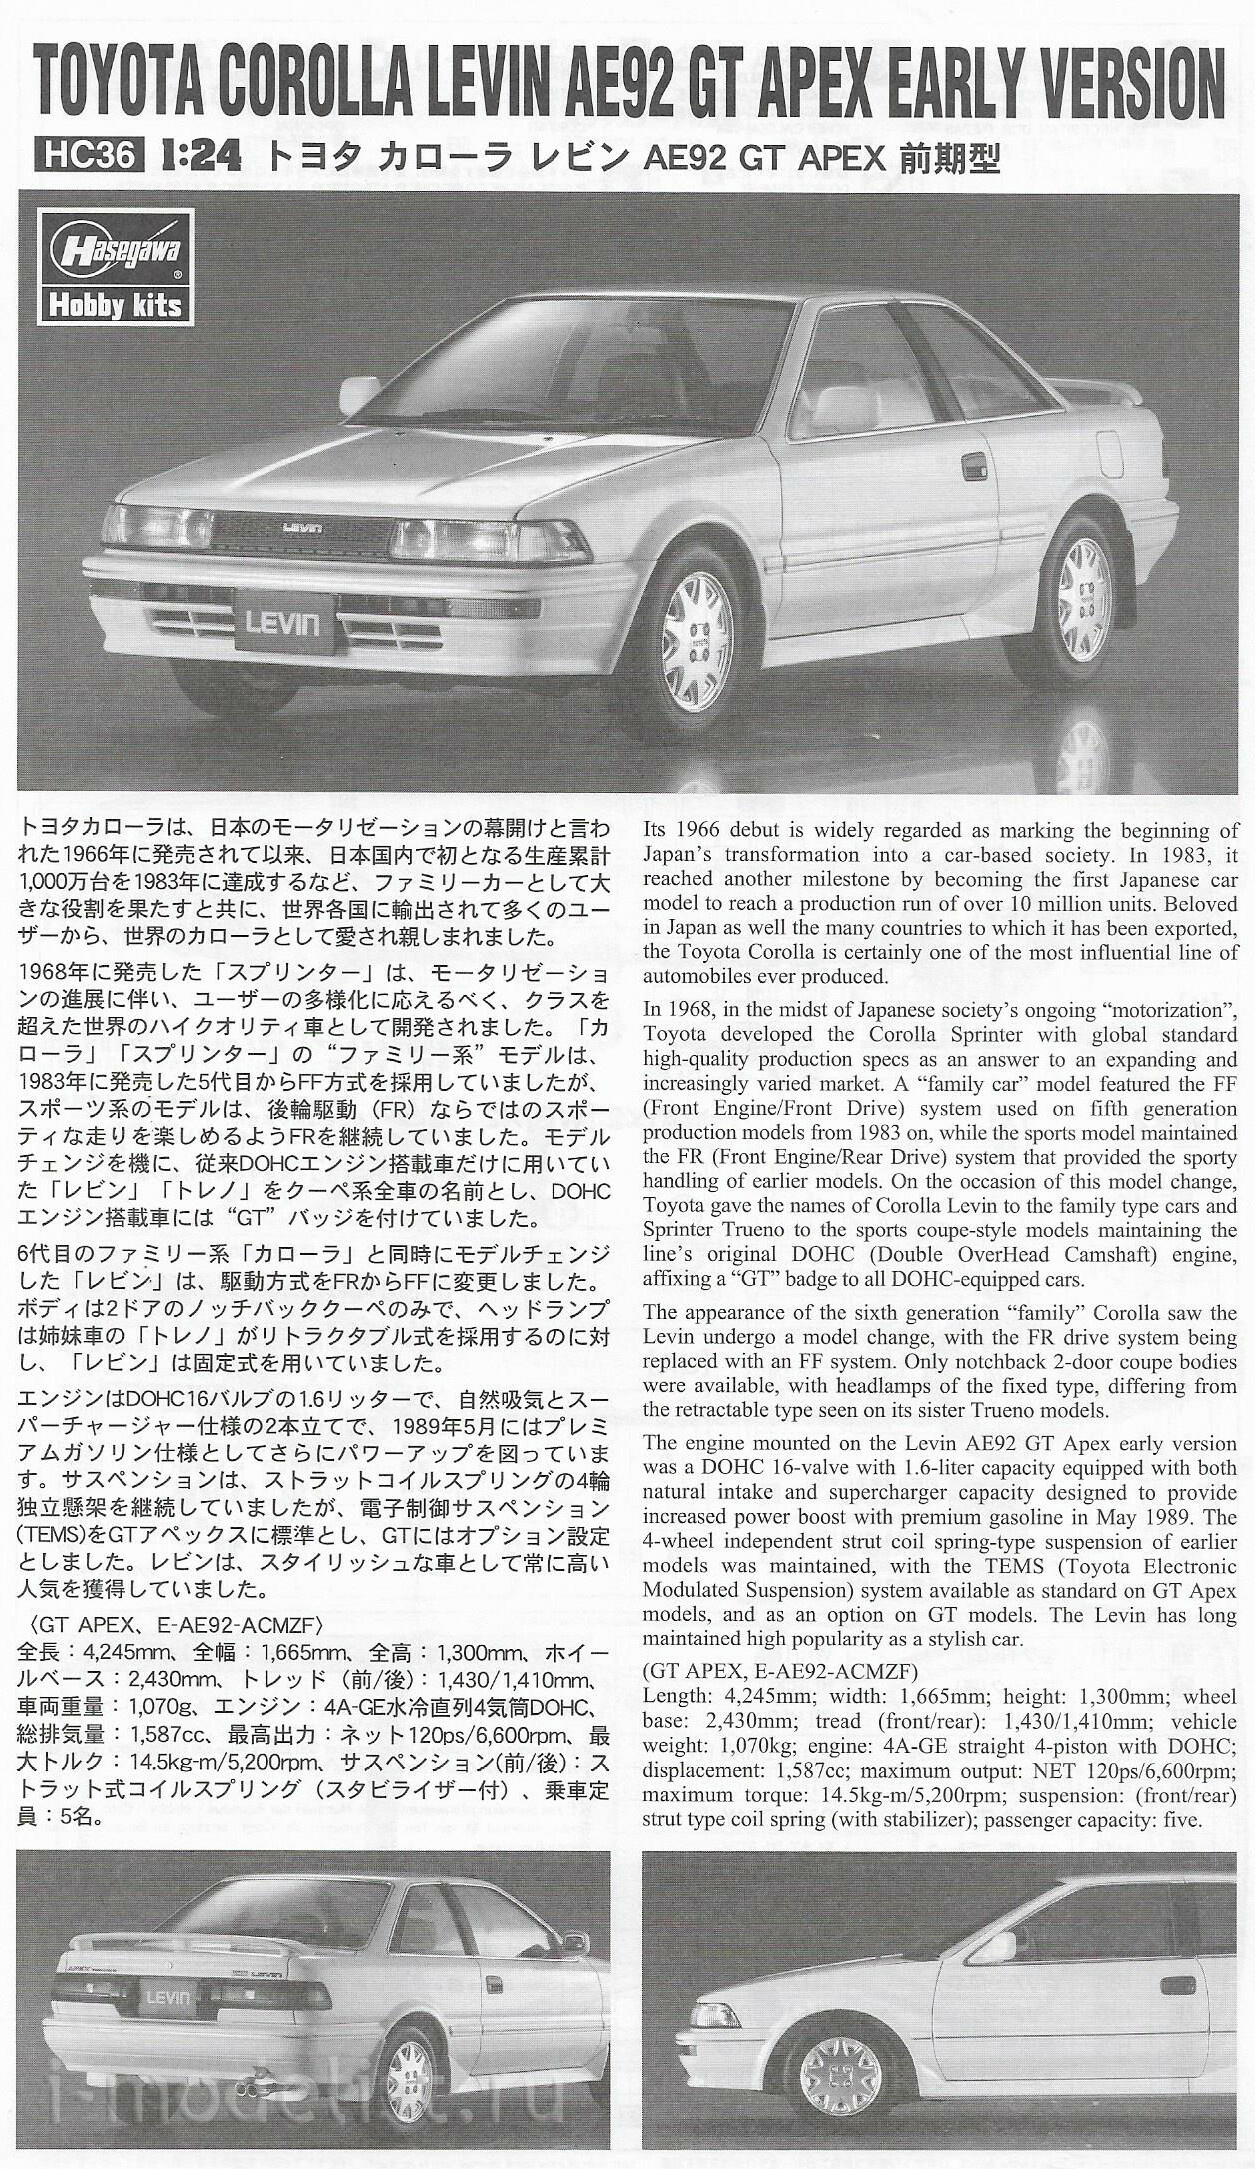 21136 Hasegawa 1/24 Toyota Corolla Levin AE92 GT Apex Car